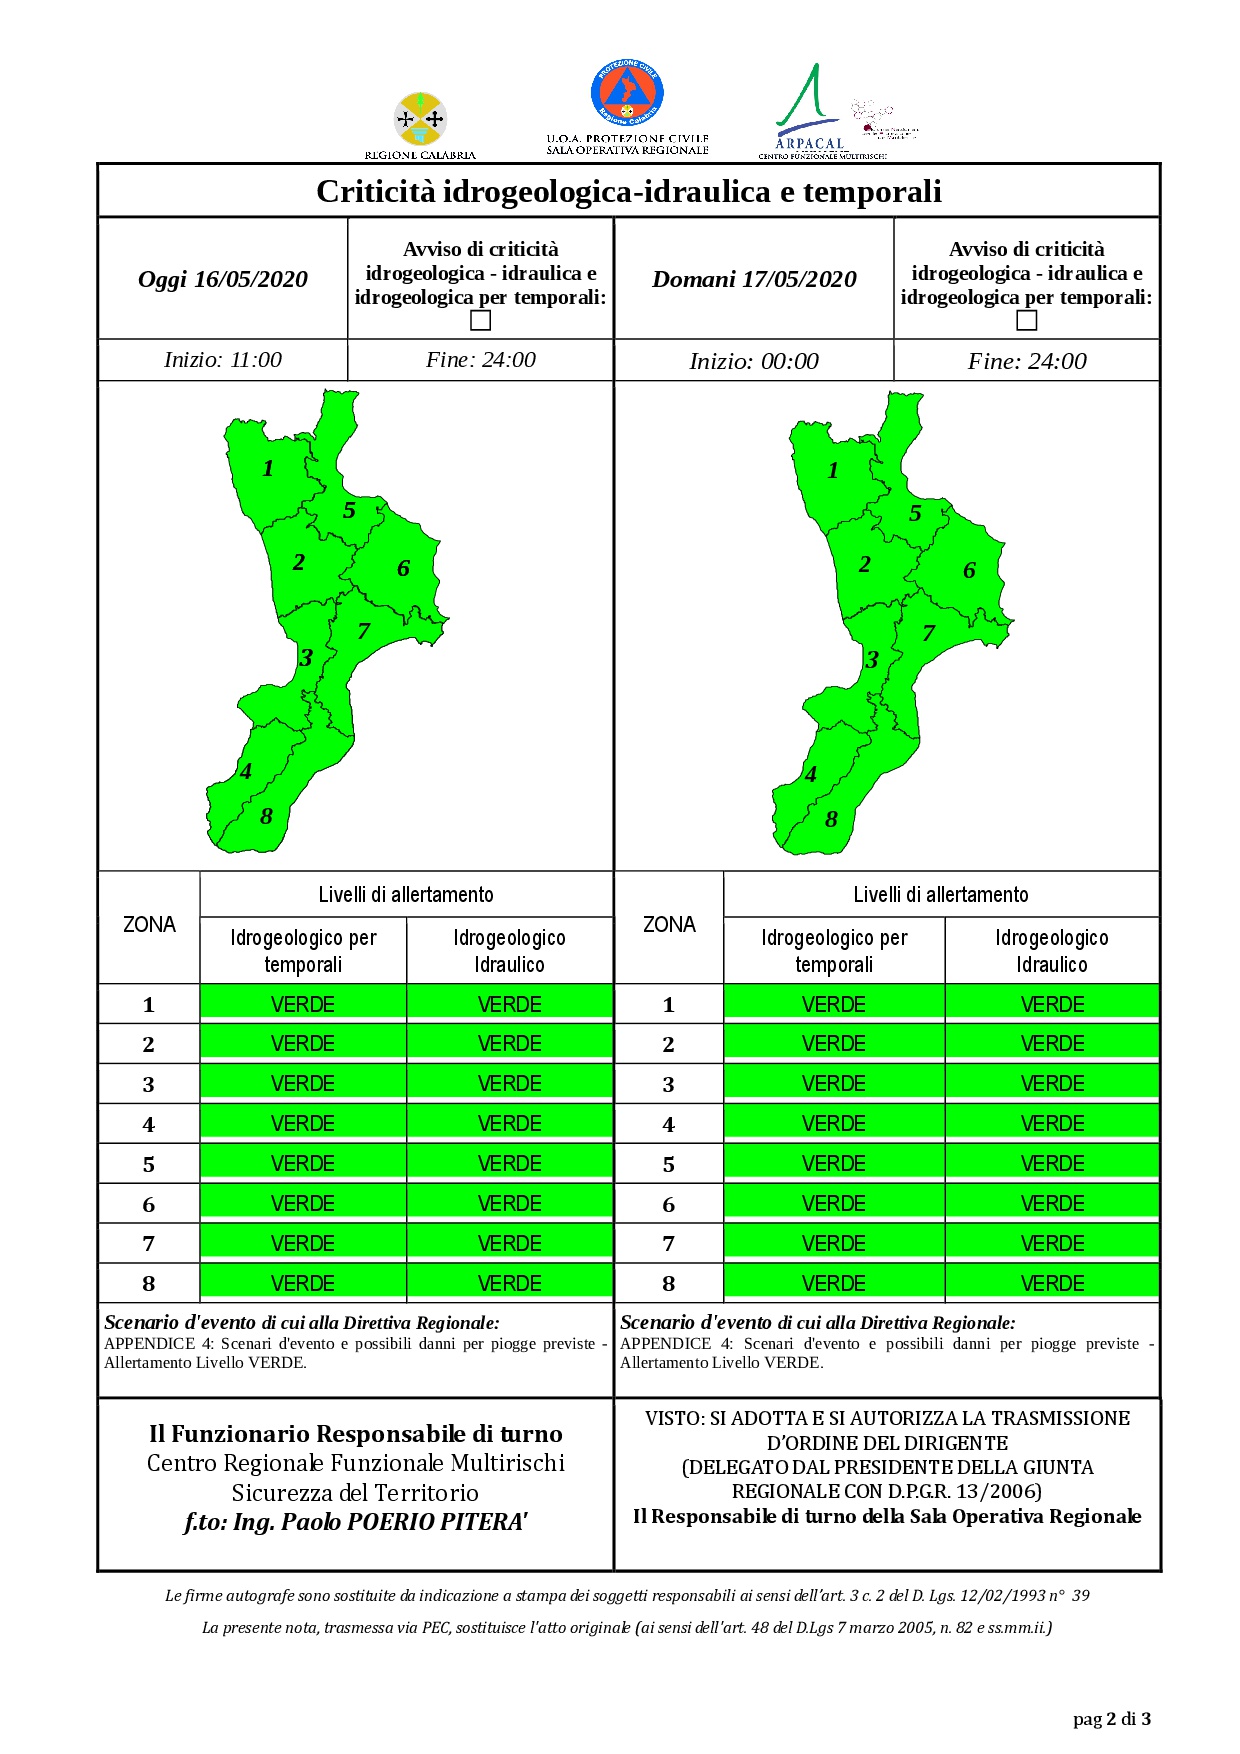 Criticità idrogeologica-idraulica e temporali in Calabria 16-05-2020